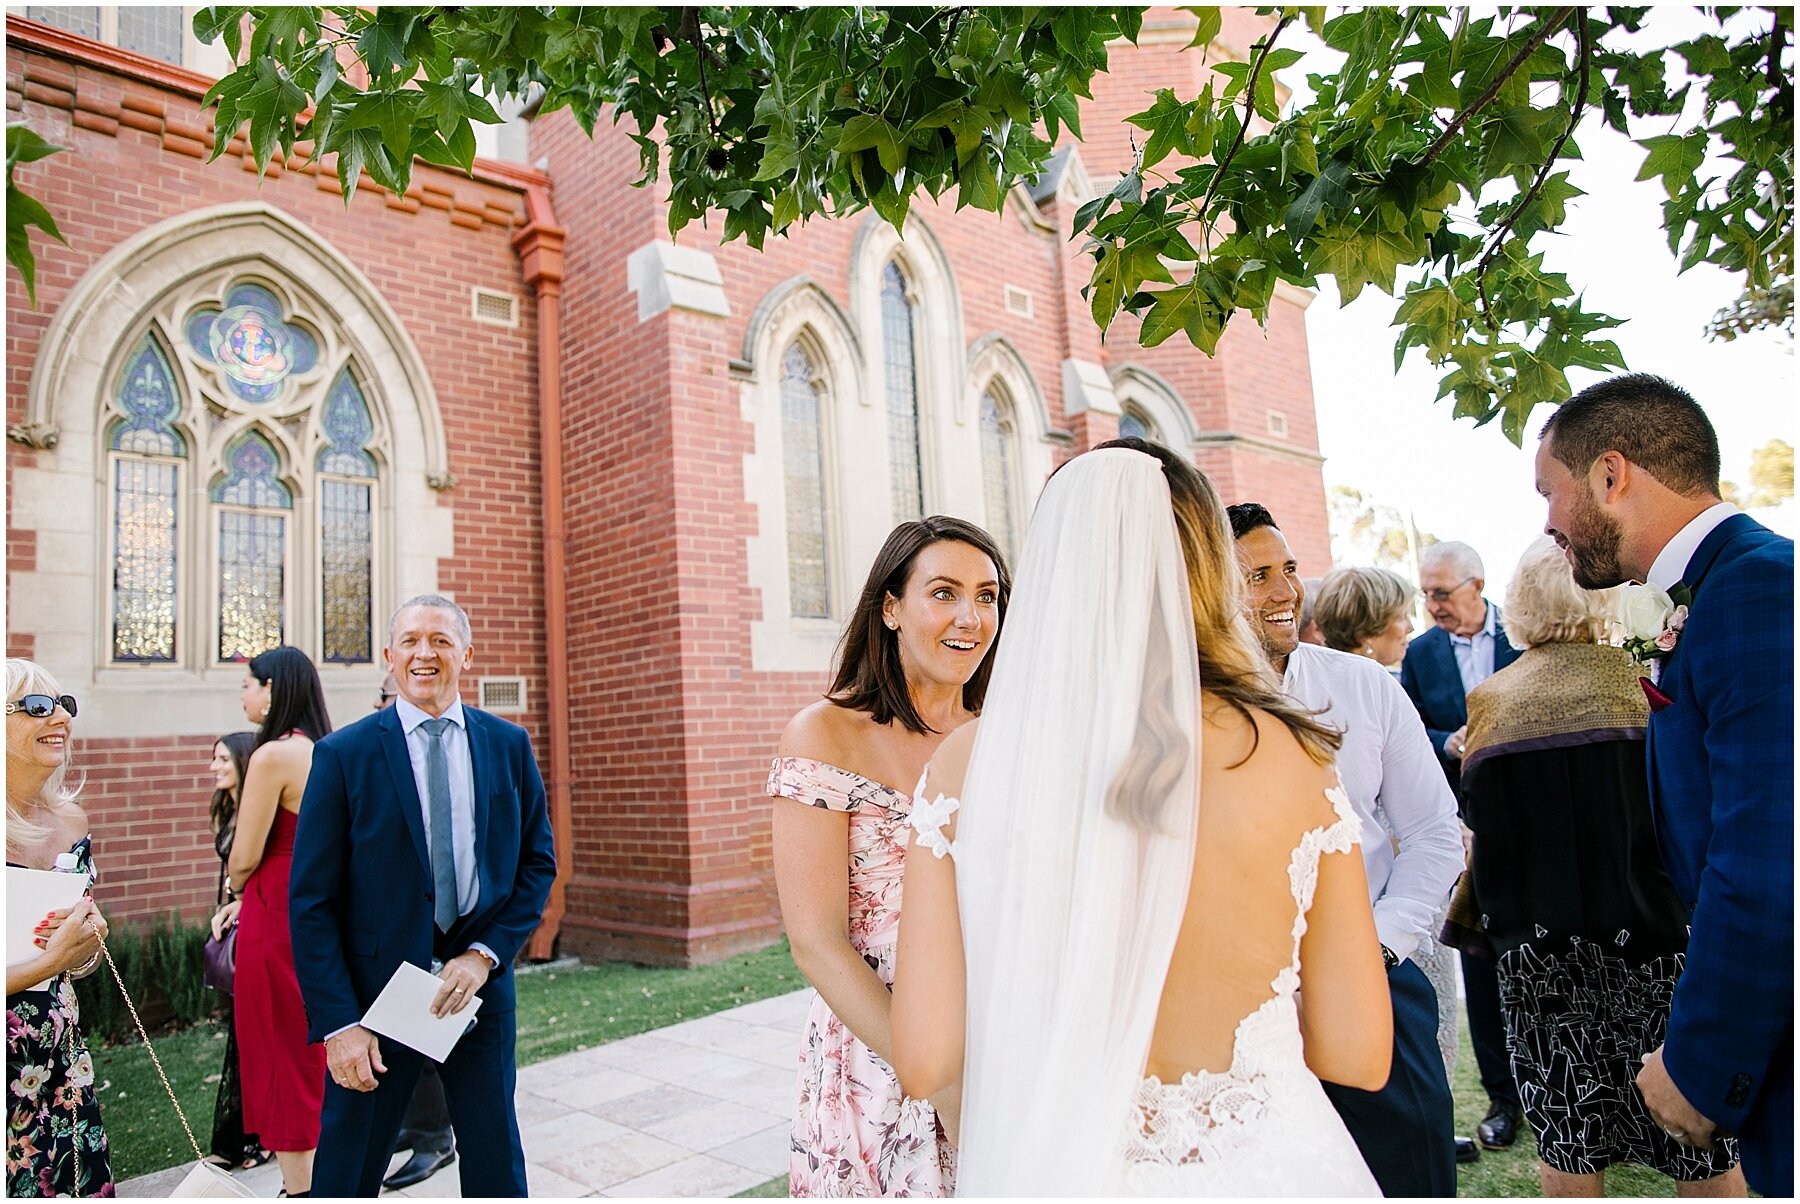 Wedding Congratulation | Perth Wedding Photography